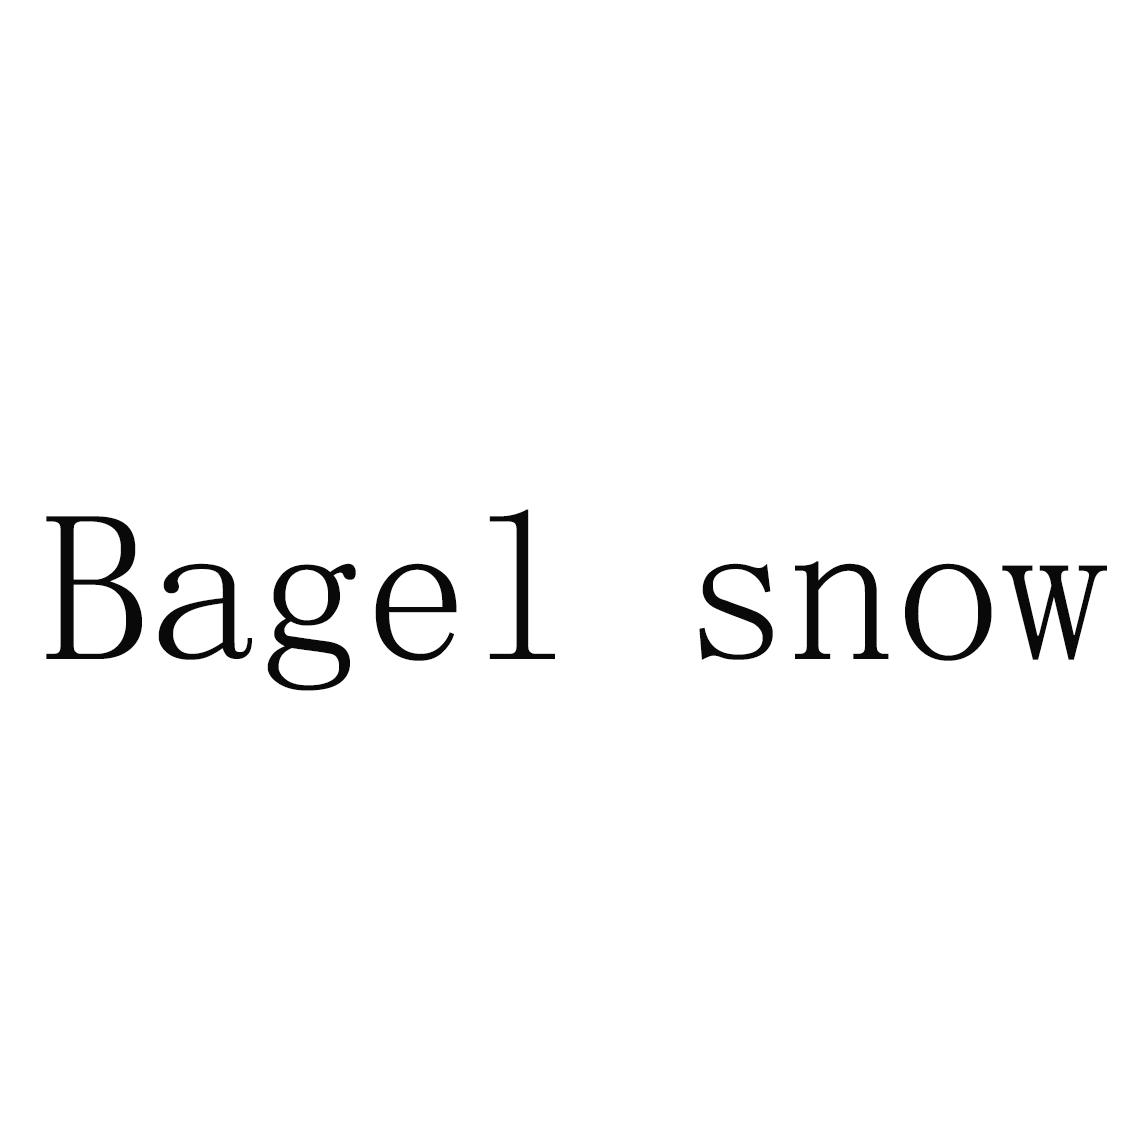 BAGEL SNOW